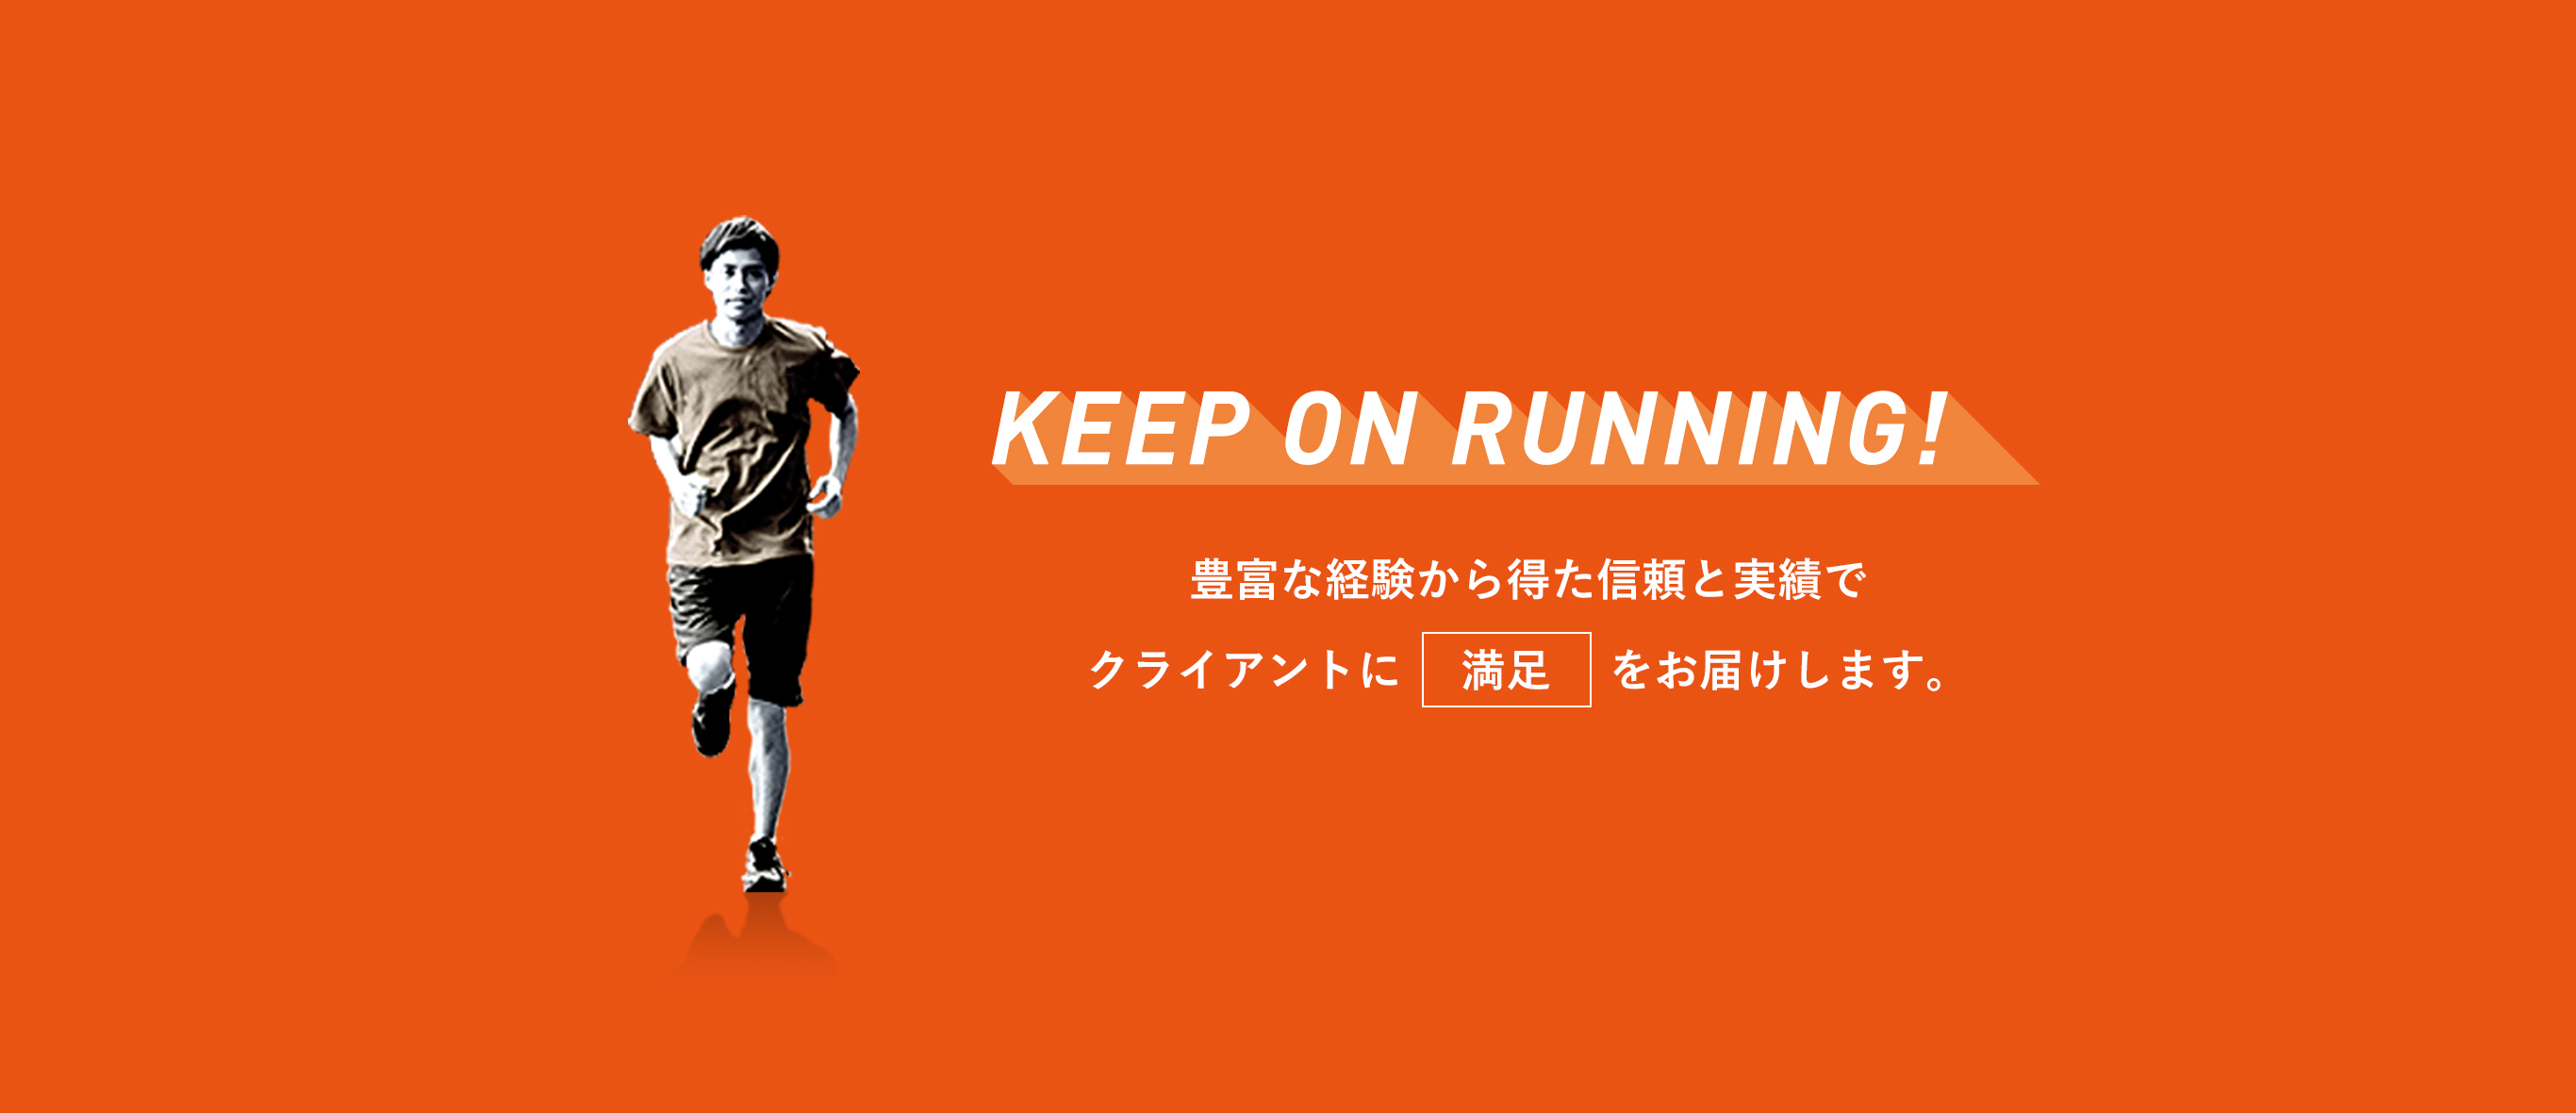 KEEP ON RUNNNING!